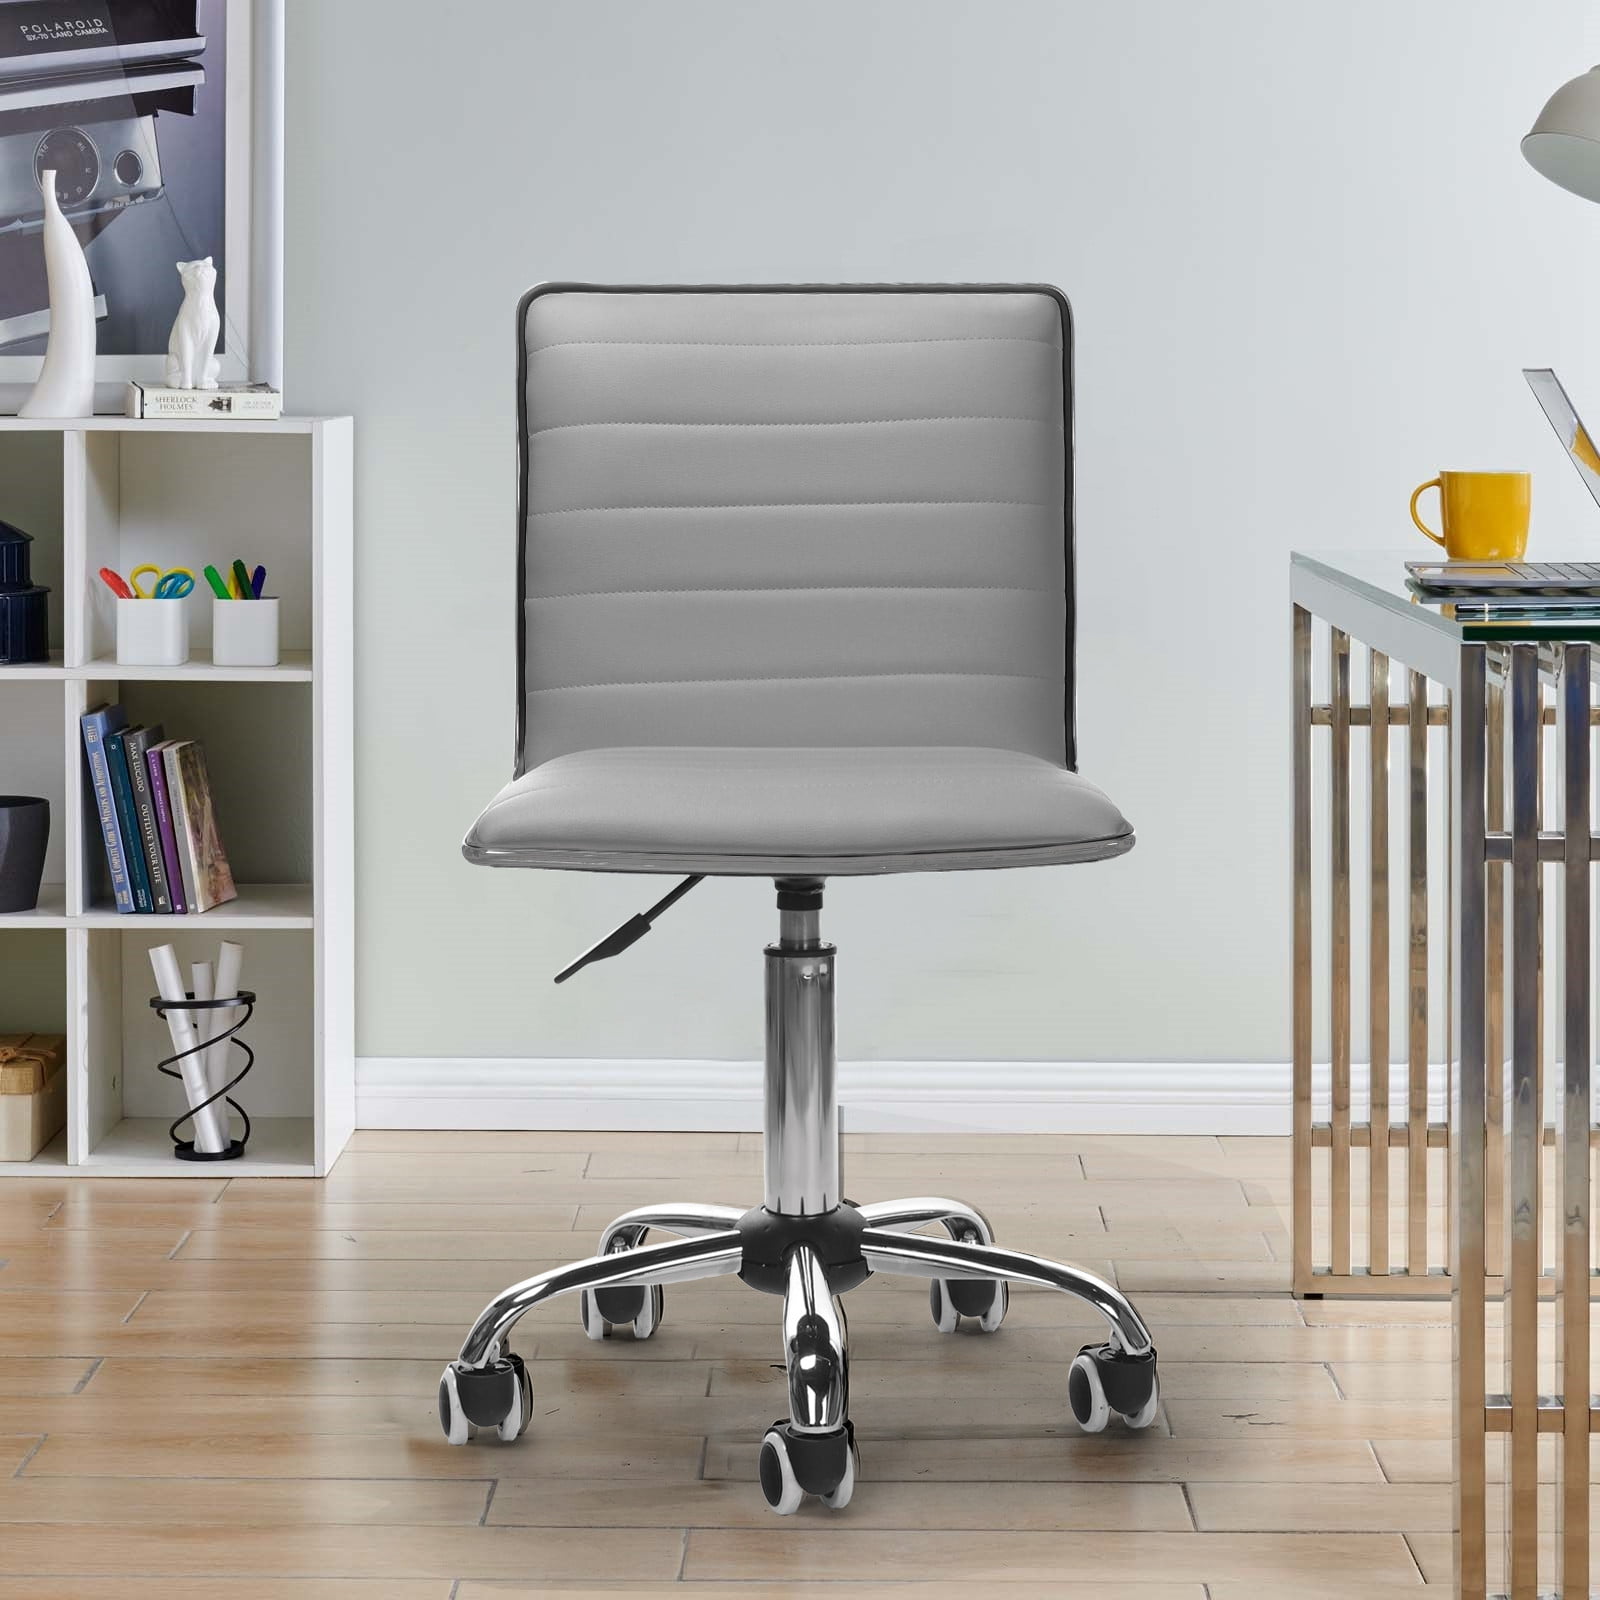 Details about   Ergonomic Desk Chairs Home Office Computer Task Chair Adjustable Flip up Armrest 